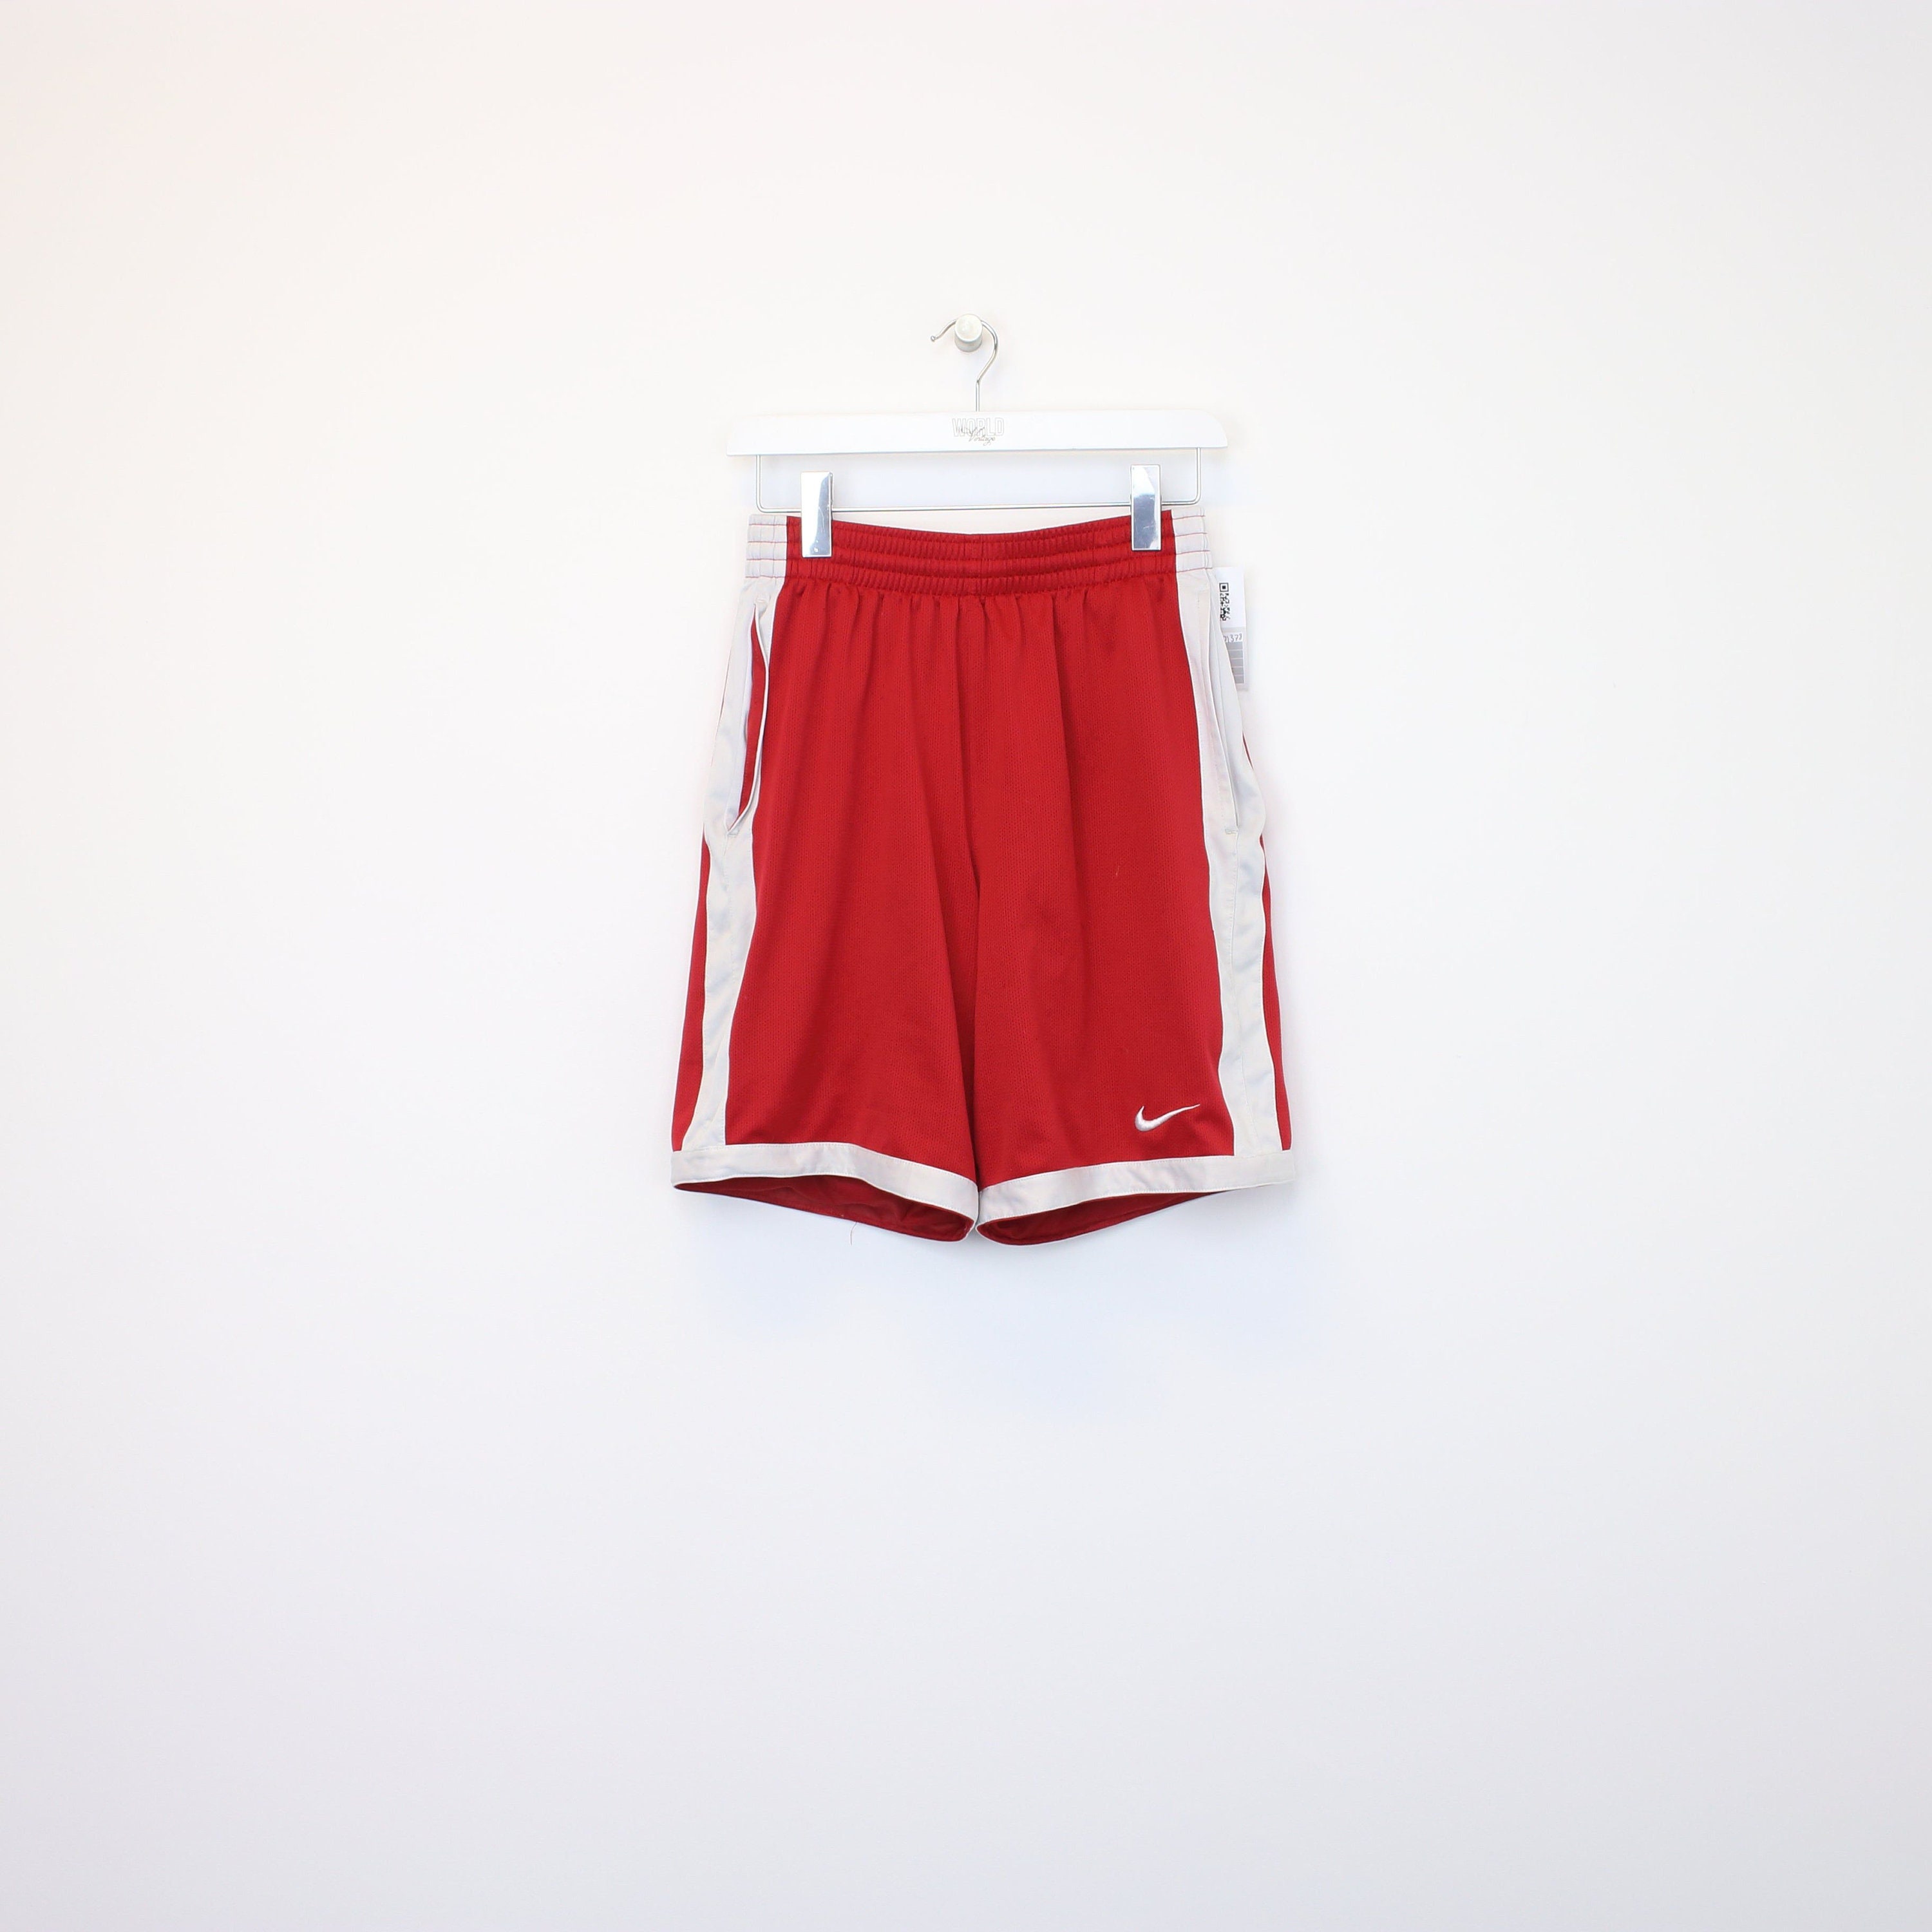 Rare Nike Basketball Dazzle Shorts Silky Shiny Red W… - Gem